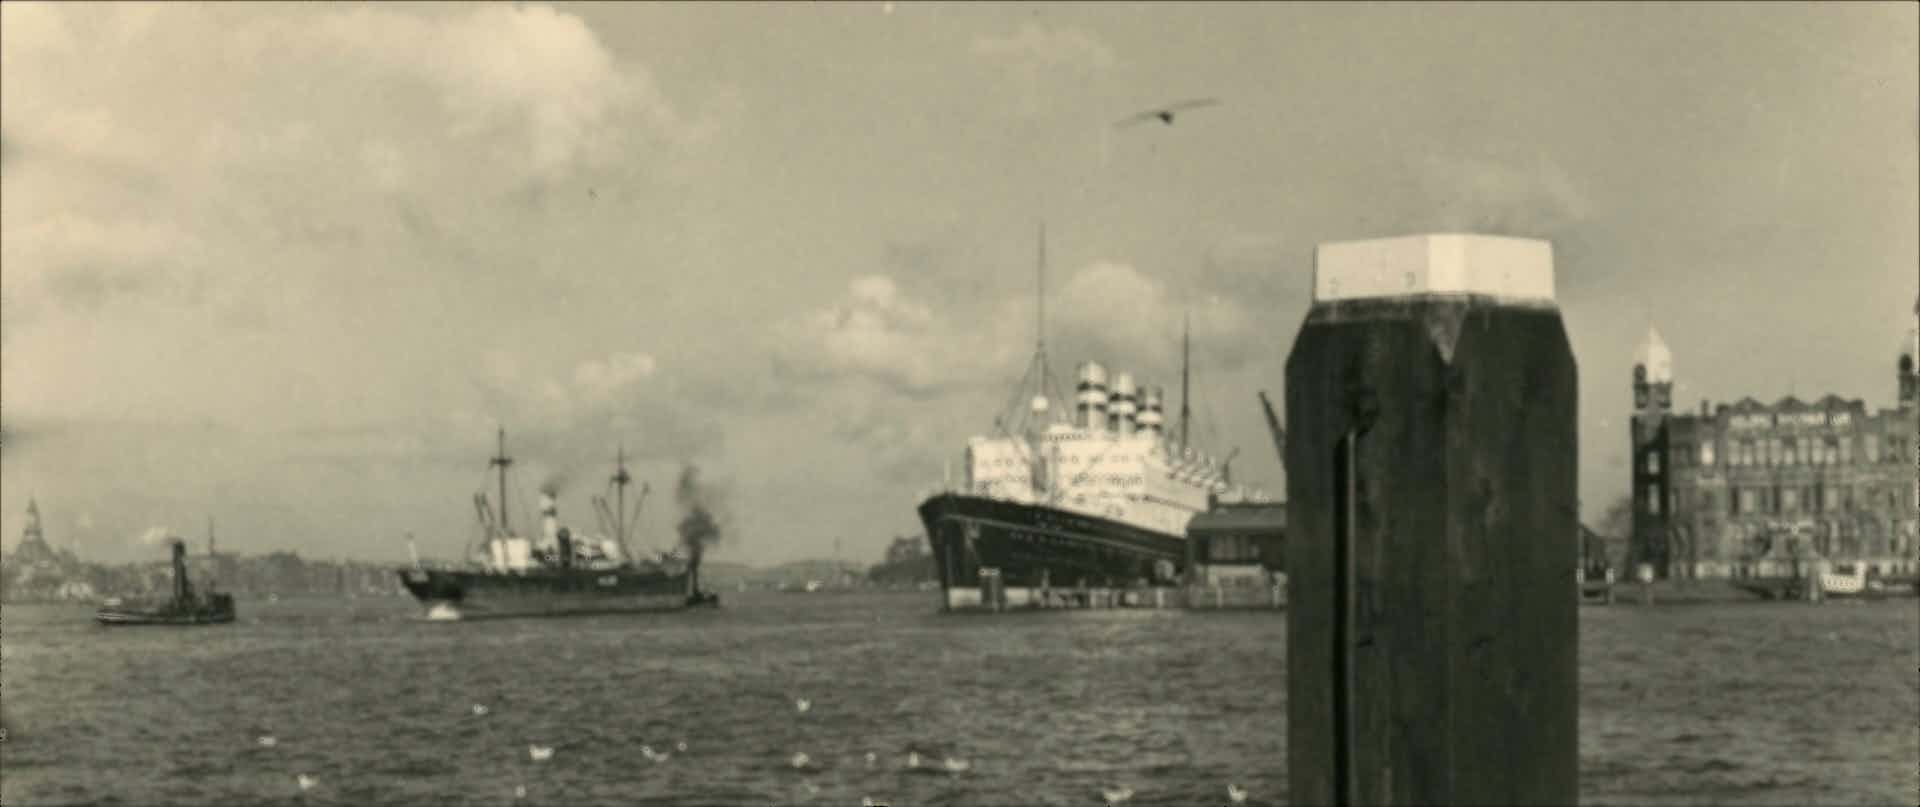 rotterdam cruise ship history